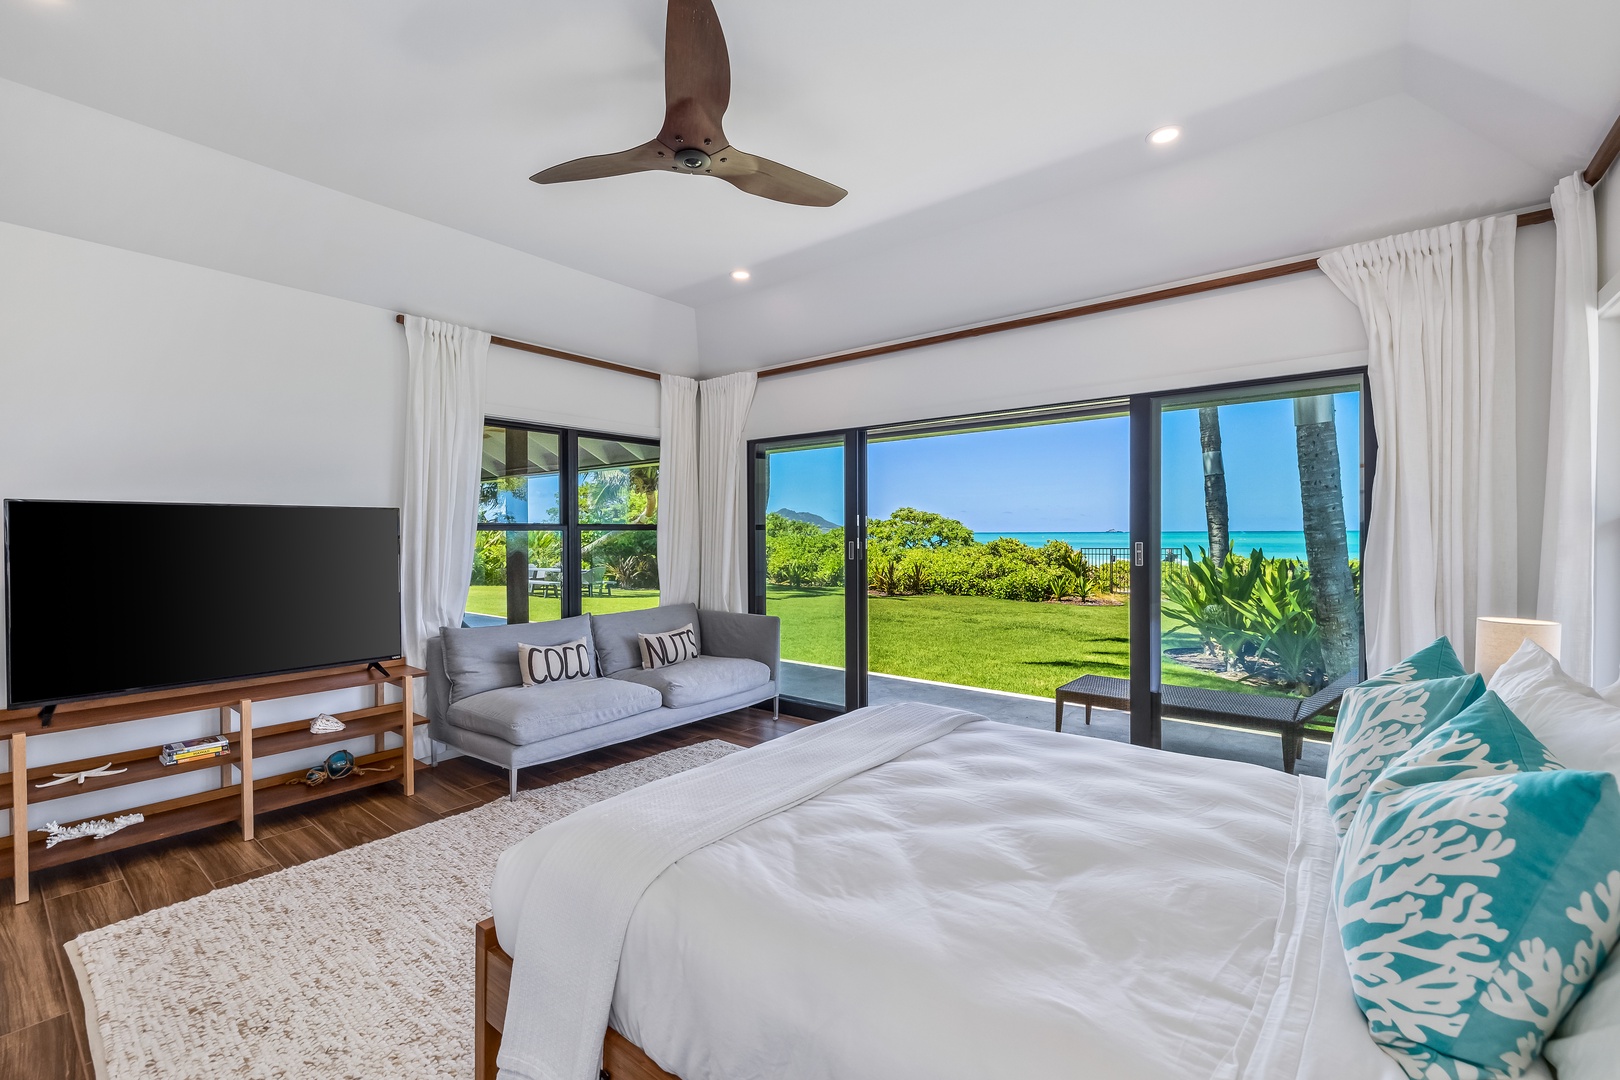 Kailua Vacation Rentals, Kailua Beach Villa - Makai South suite ocean views and outdoor access through sliding doors